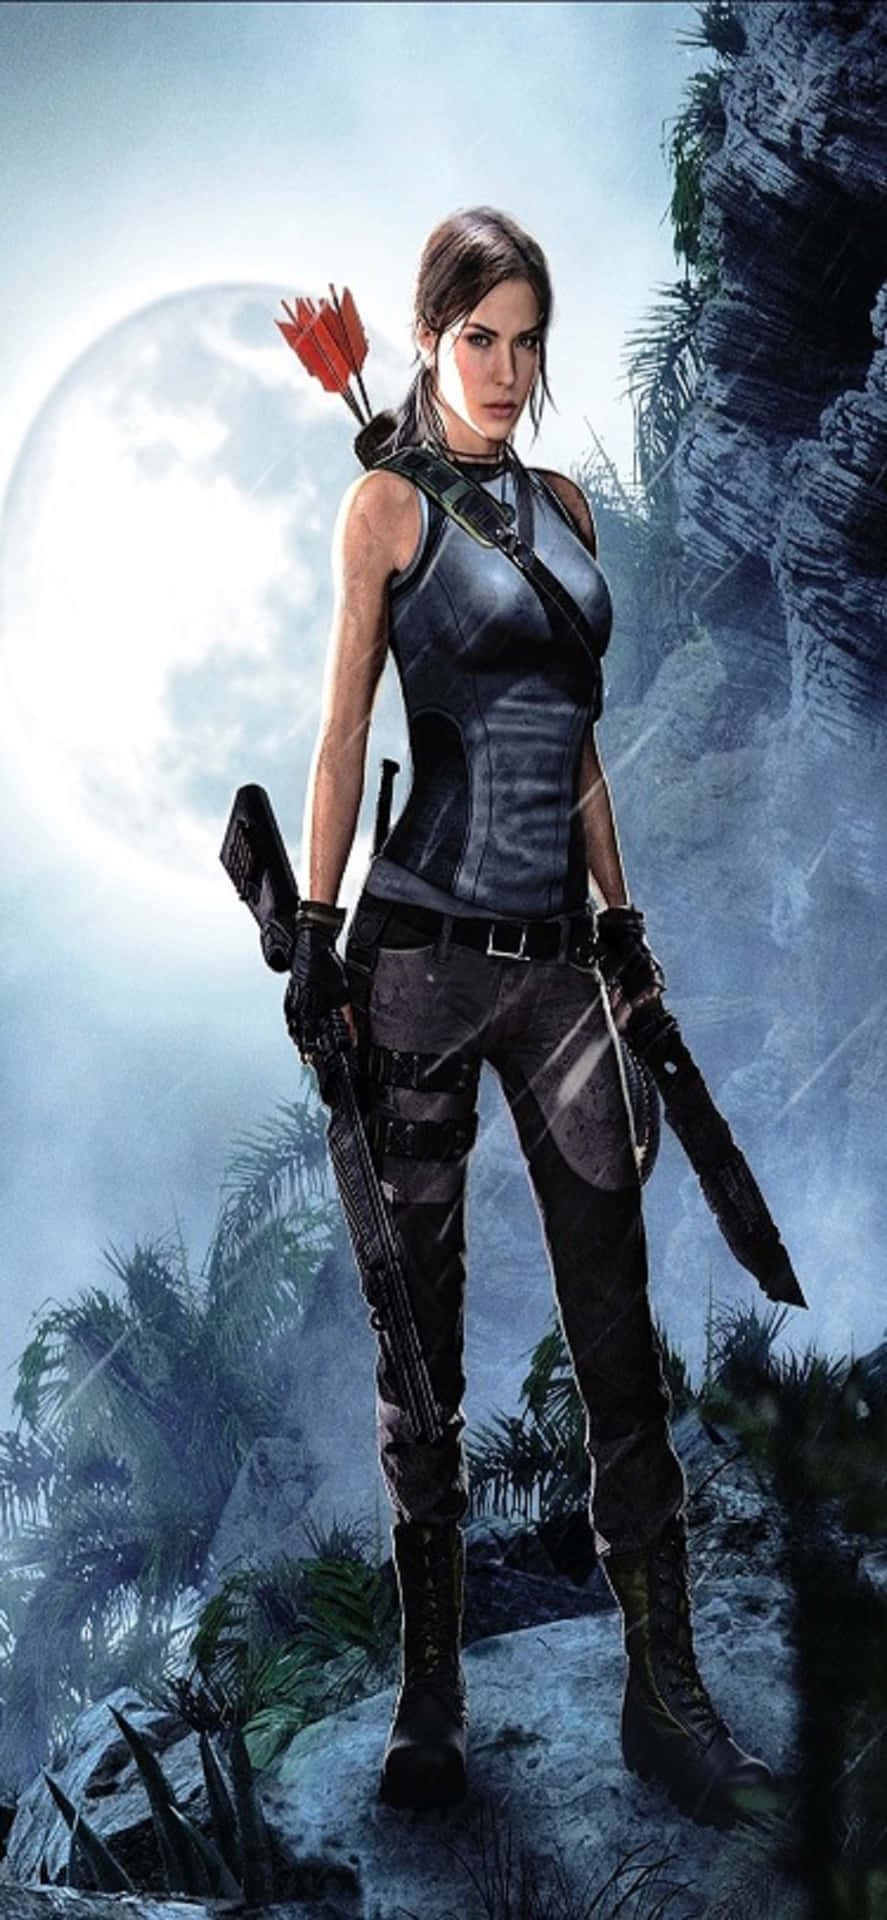 Unlock secrets and explore Lara Croft’s newest adventure on the Iphone X Shadow Of The Tomb Raider